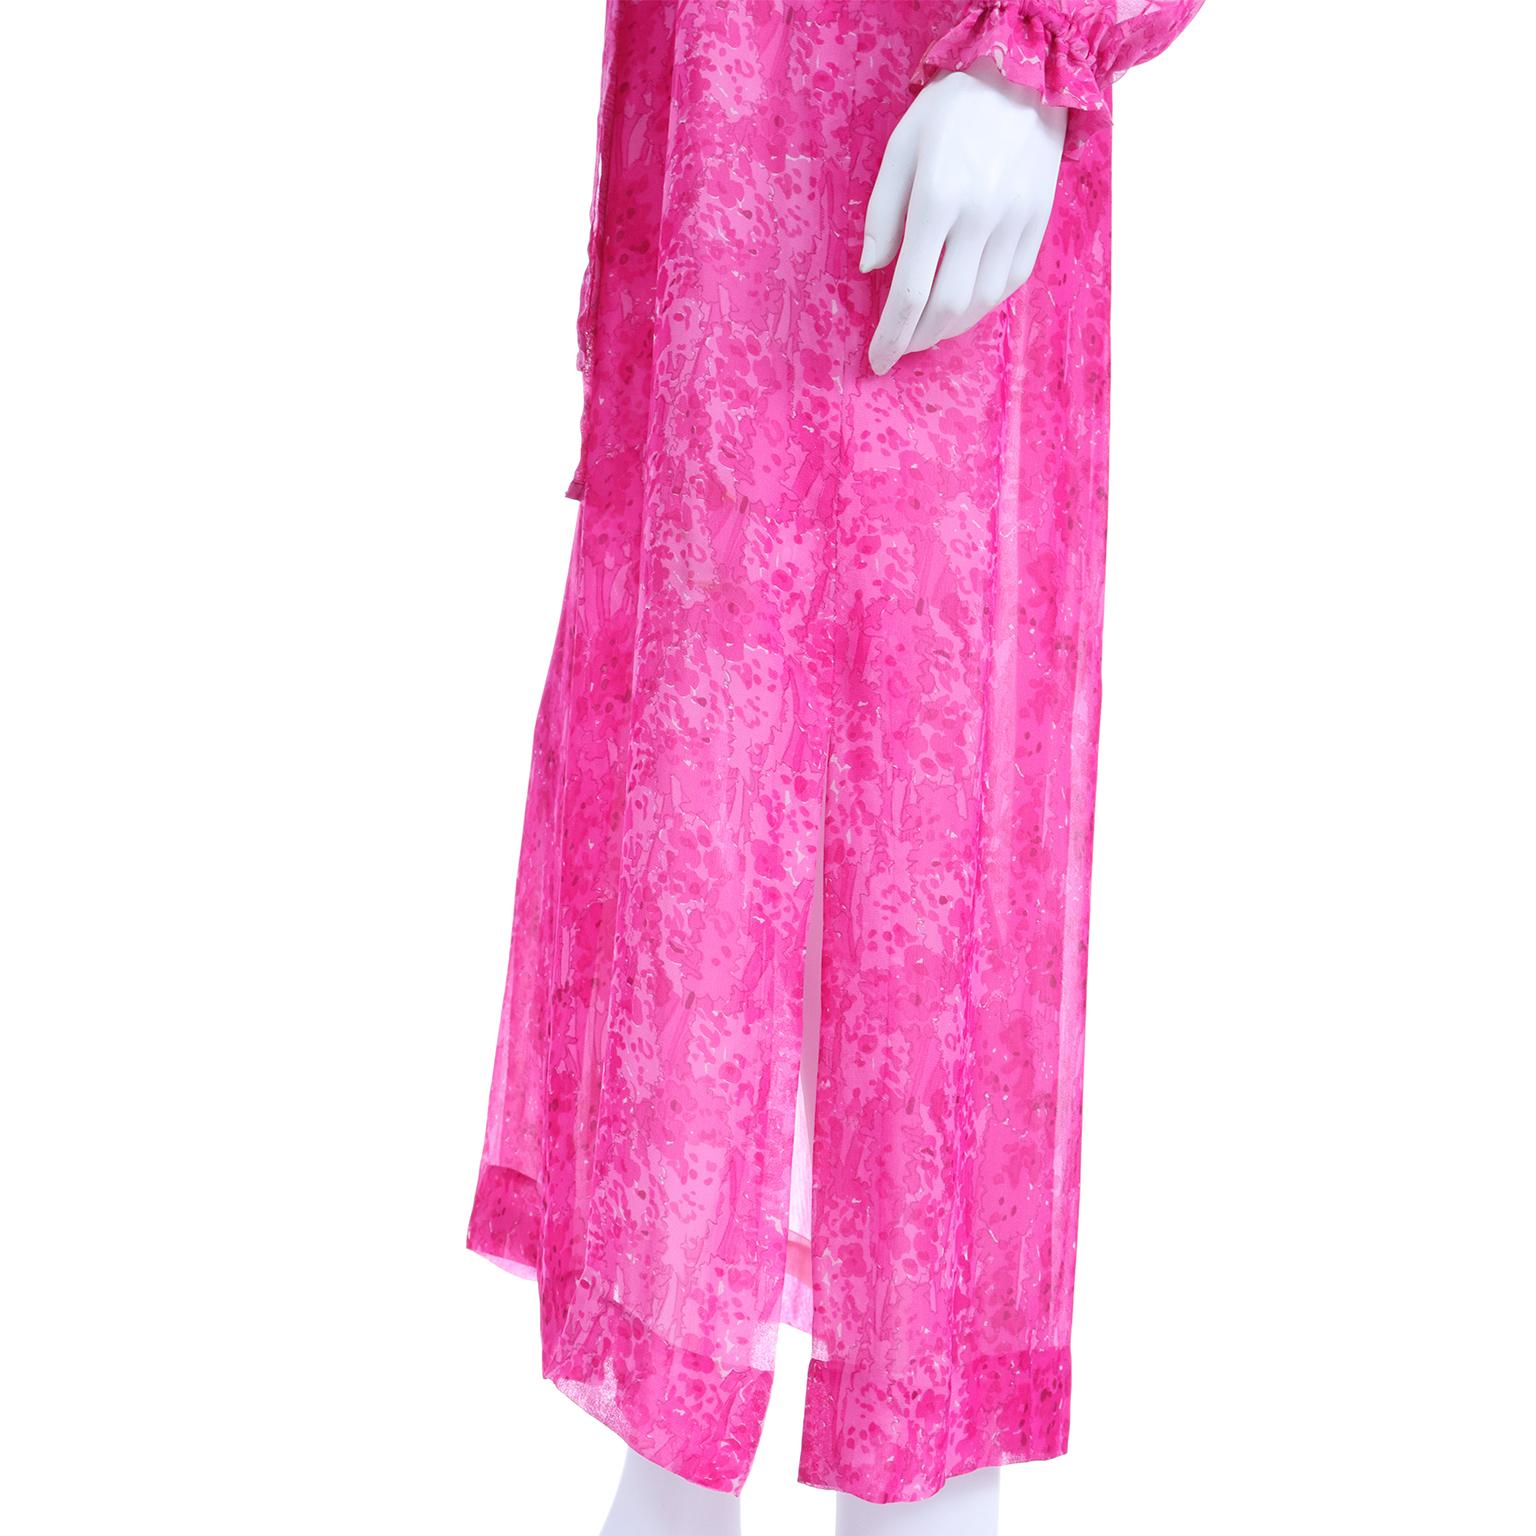 Givenchy Vintage 1970s Sheer Pink Watercolor Print Silk Dress w Sash & Open back 6